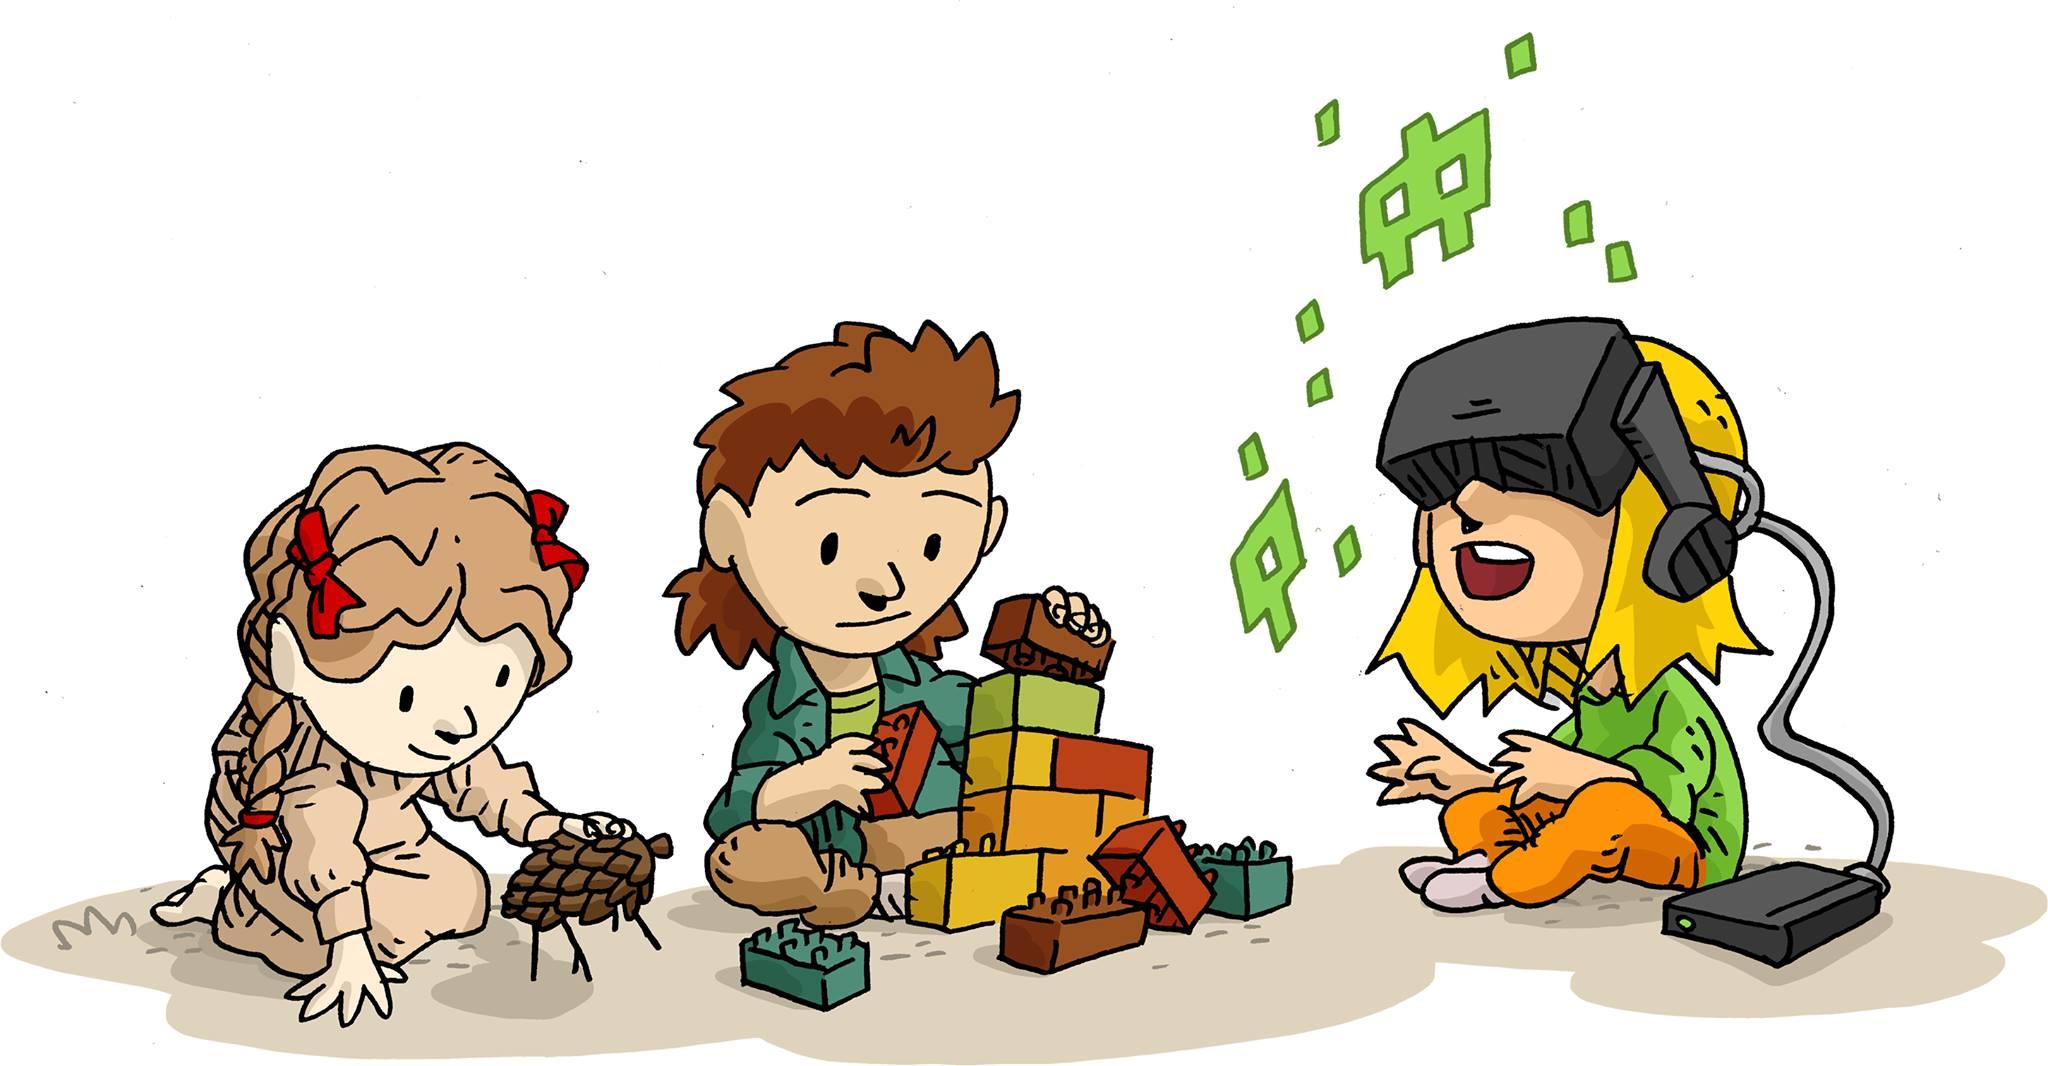 Comic zu spielenden Kindern, Bildrechte: CC BY 4.0 Finnish National Audiovisual Institute